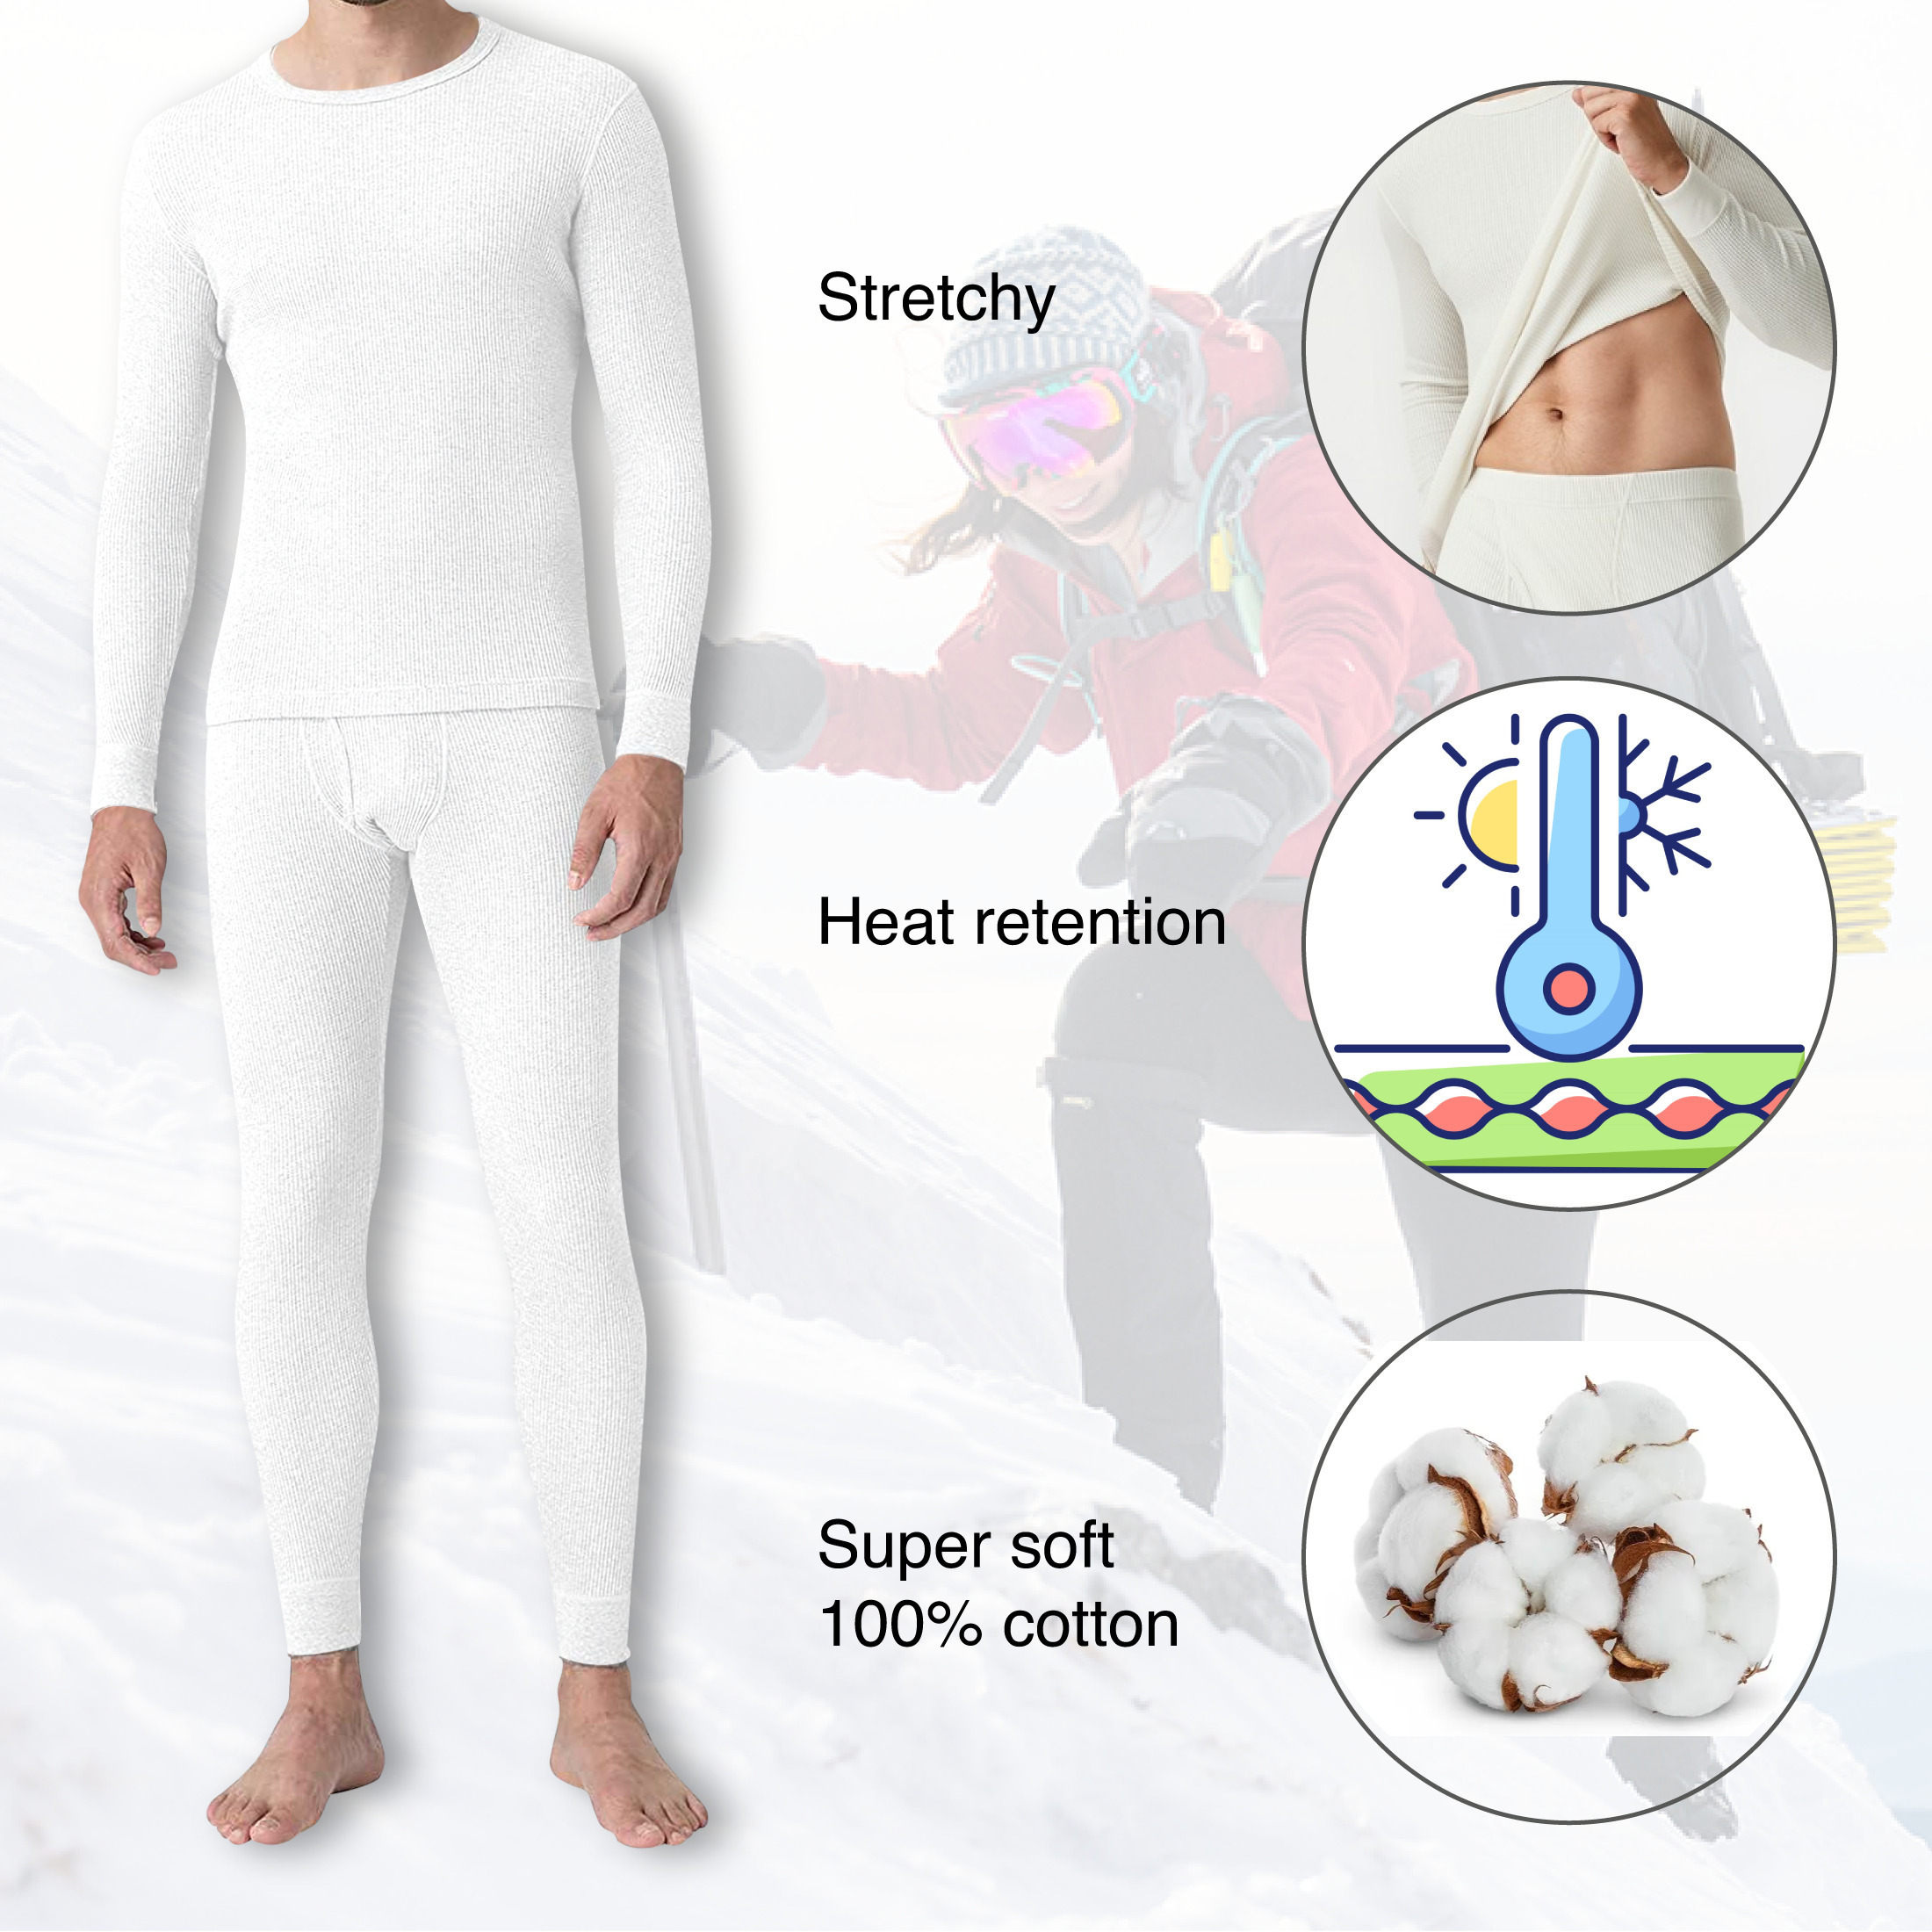 2-Sets: Men's Super Soft Cotton Waffle Knit Winter Thermal Underwear Set - White & Navy, Large